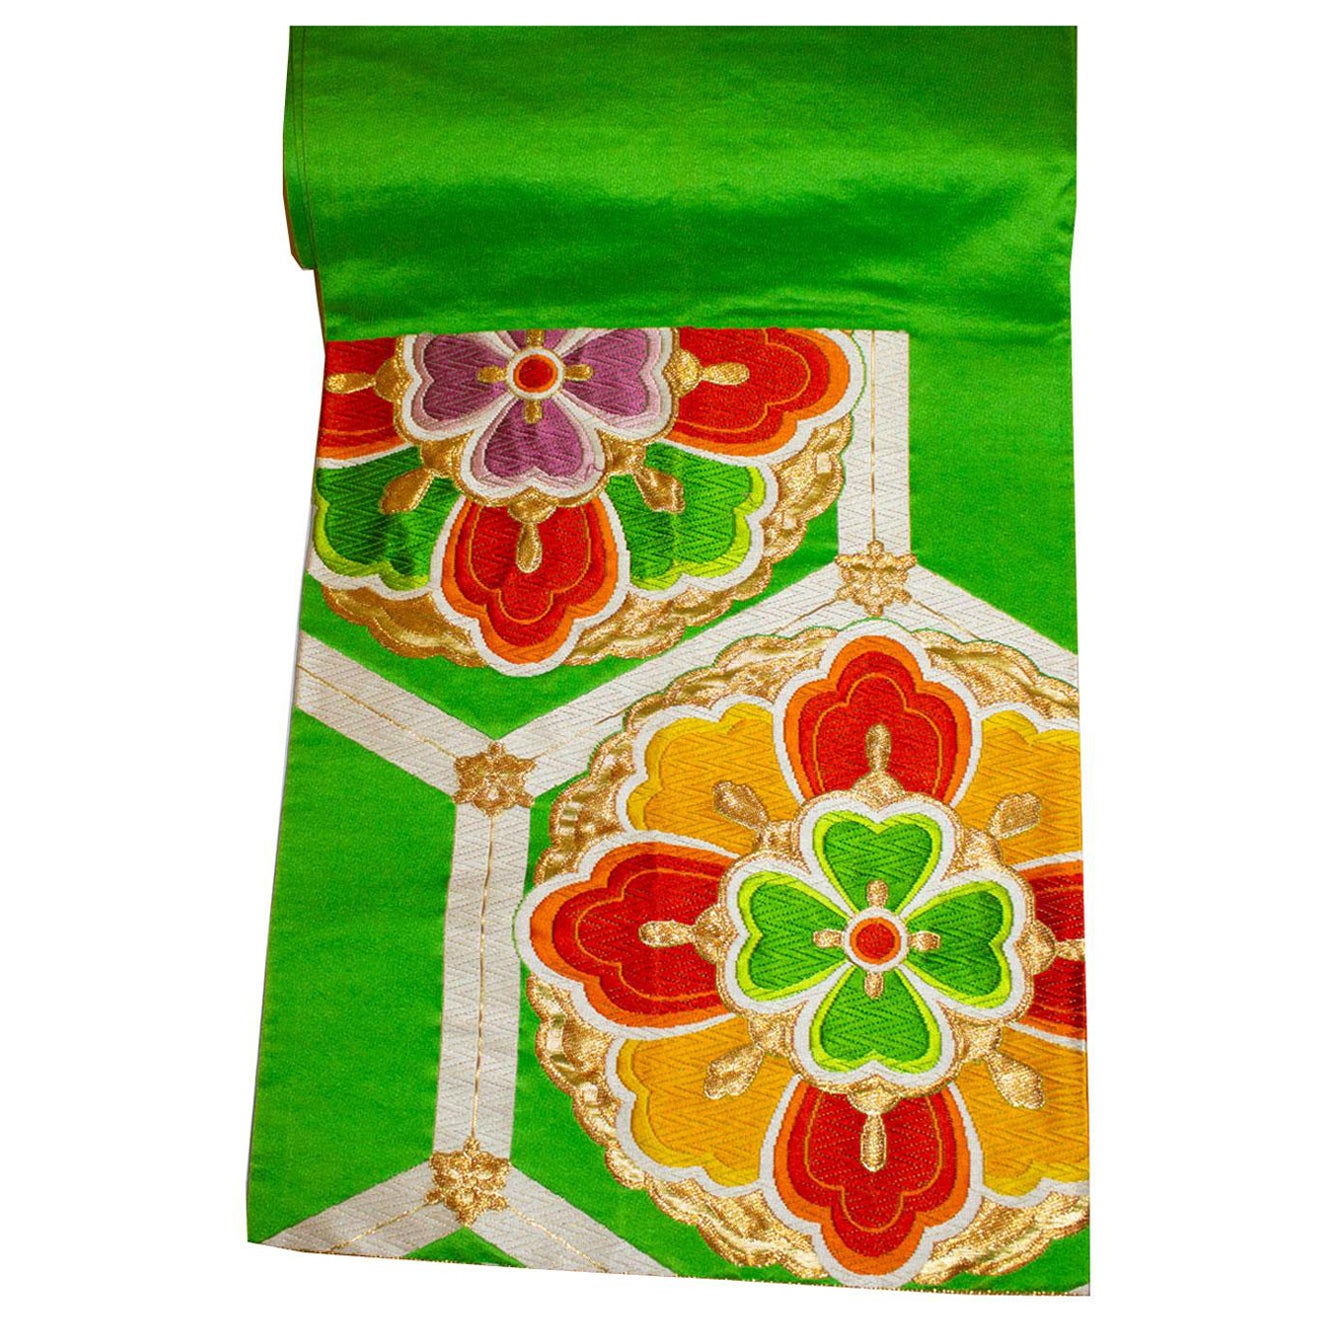 Grüner, lila und orangefarbener Obi-Gürtel mit sechseckigem Design